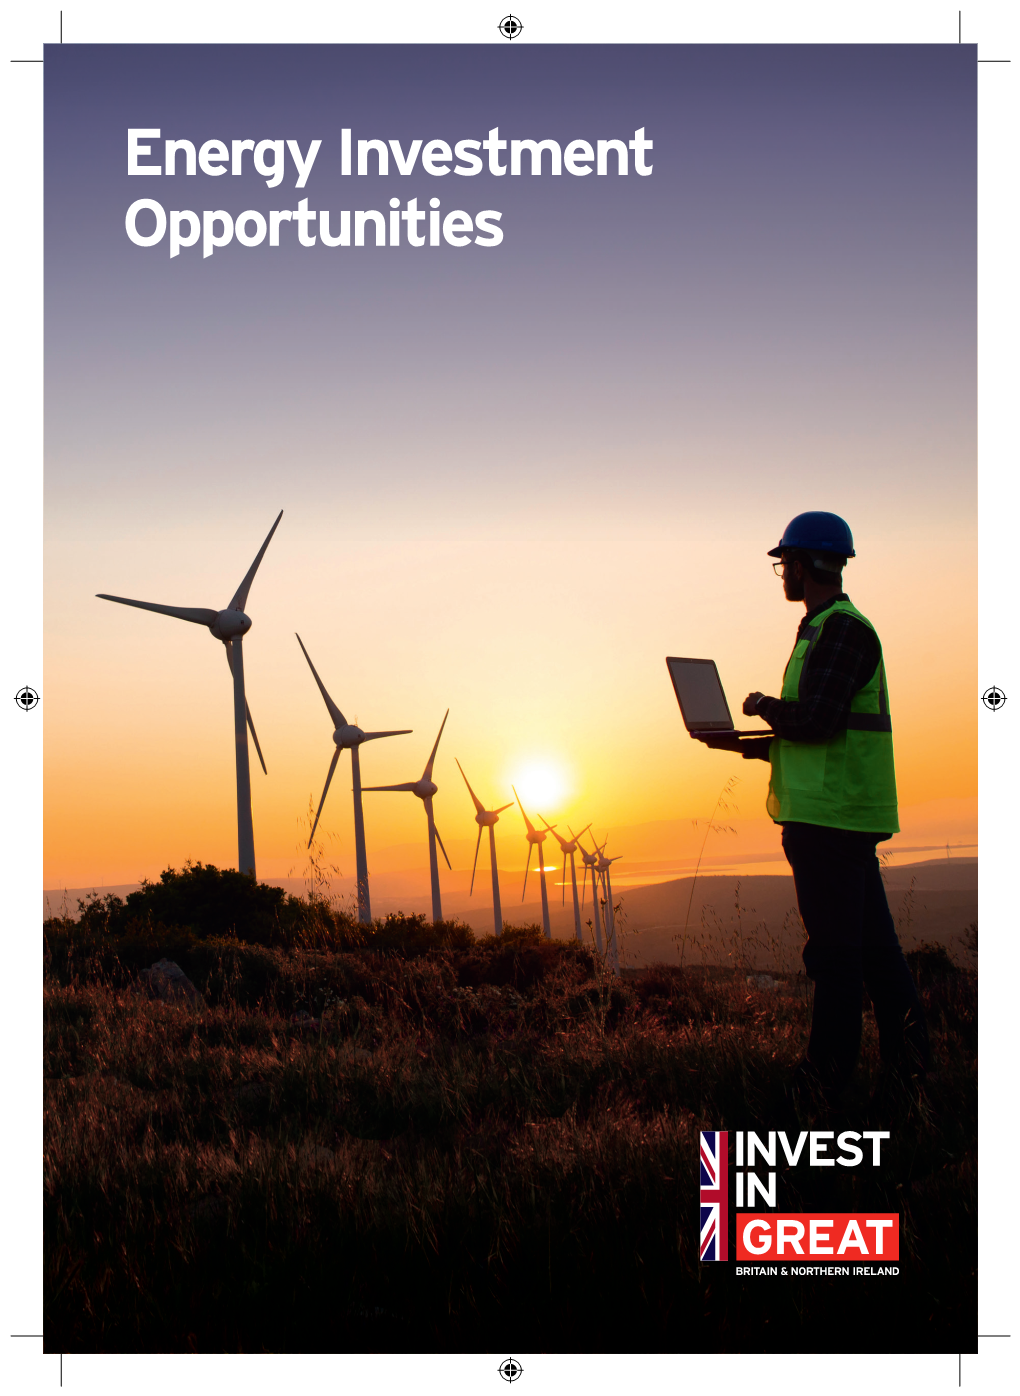 Energy Investment Opportunities 2 Great.Gov.Uk | Energy Investment Opportunities Great.Gov.Uk | Energy Investment Opportunities 1